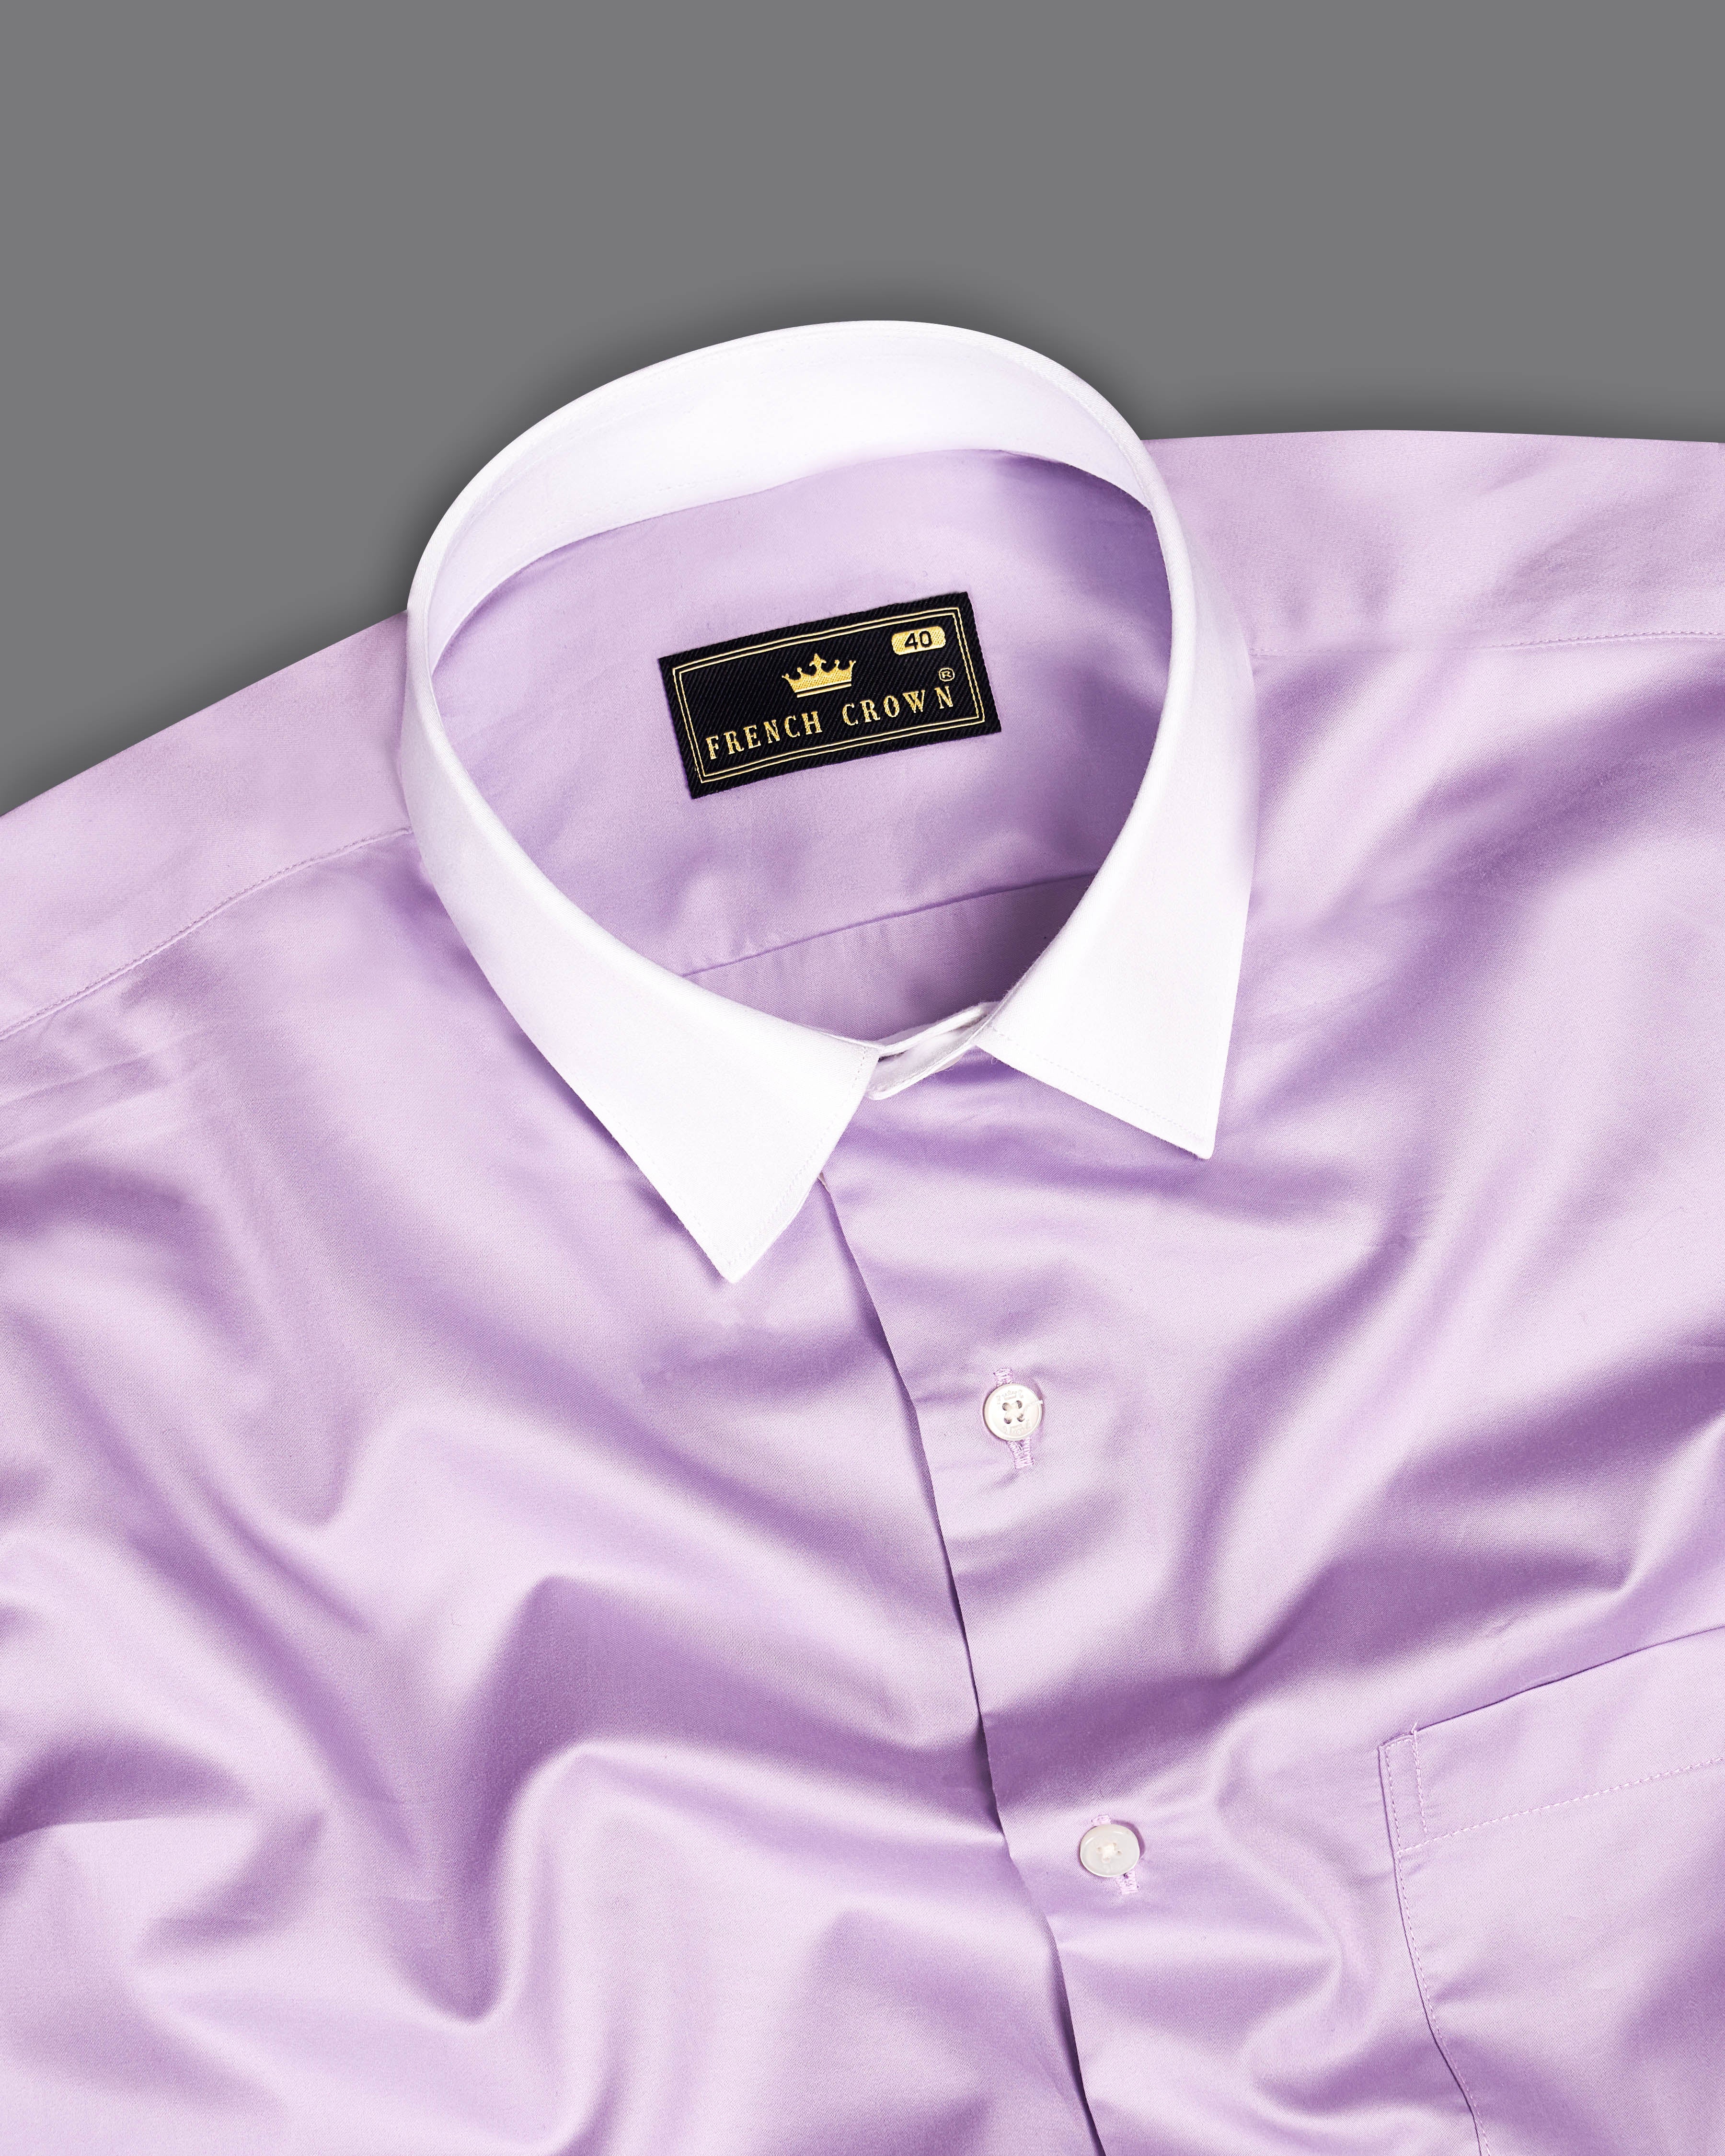 Gainsboro Purple with White Collar Super Soft Premium Cotton Shirt 9291-WCC-38,9291-WCC-H-38,9291-WCC-39,9291-WCC-H-39,9291-WCC-40,9291-WCC-H-40,9291-WCC-42,9291-WCC-H-42,9291-WCC-44,9291-WCC-H-44,9291-WCC-46,9291-WCC-H-46,9291-WCC-48,9291-WCC-H-48,9291-WCC-50,9291-WCC-H-50,9291-WCC-52,9291-WCC-H-52